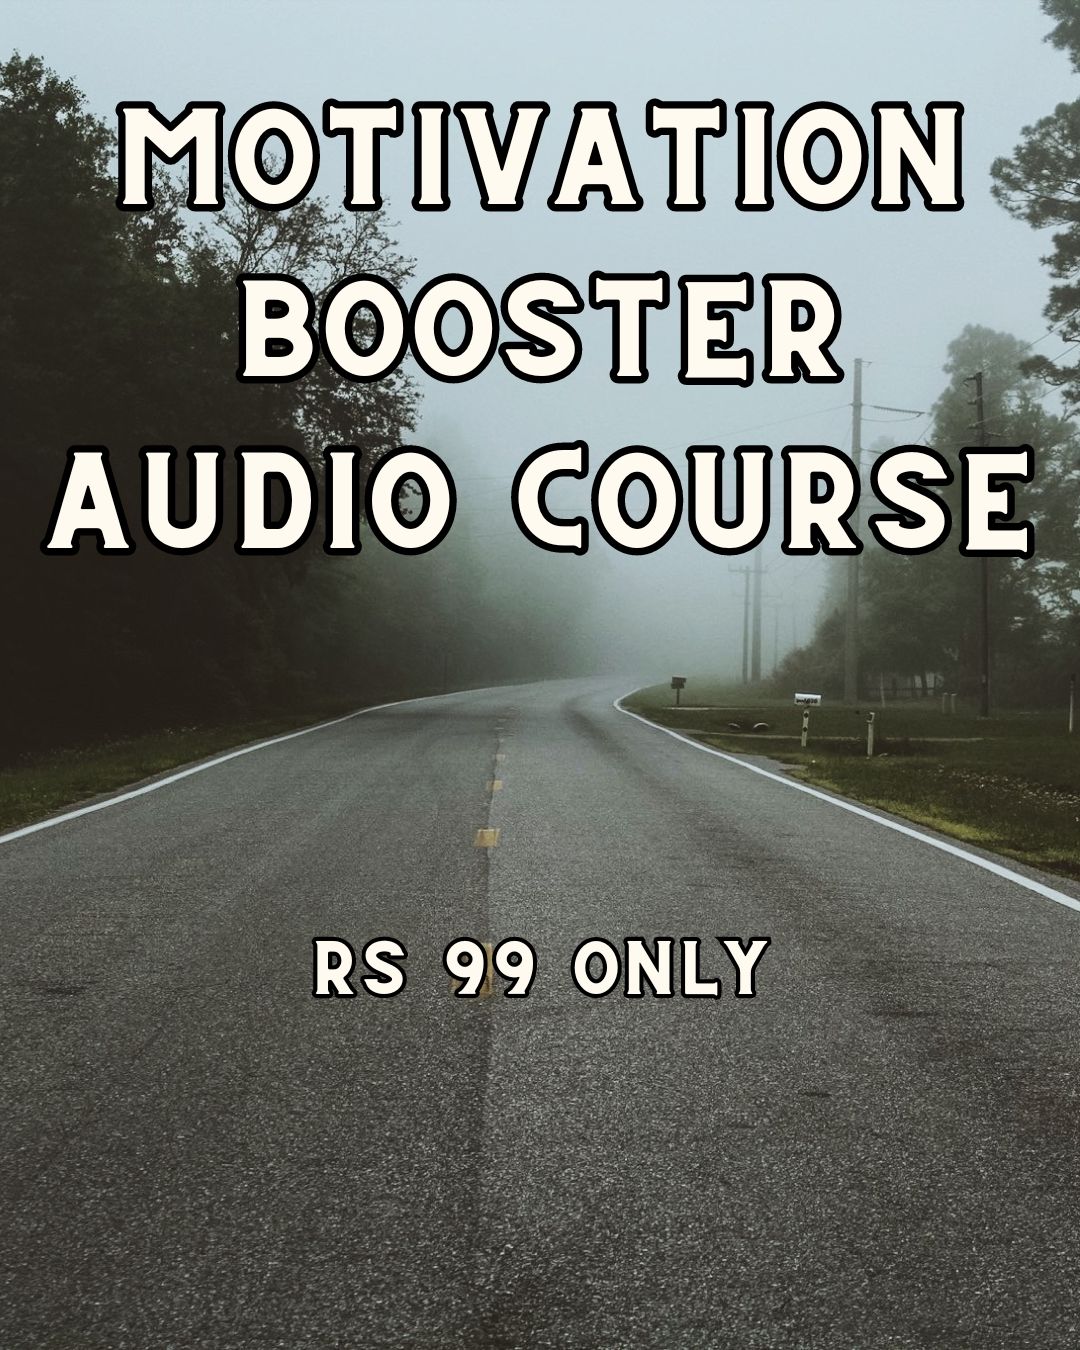 Motivation Booster Audio Course